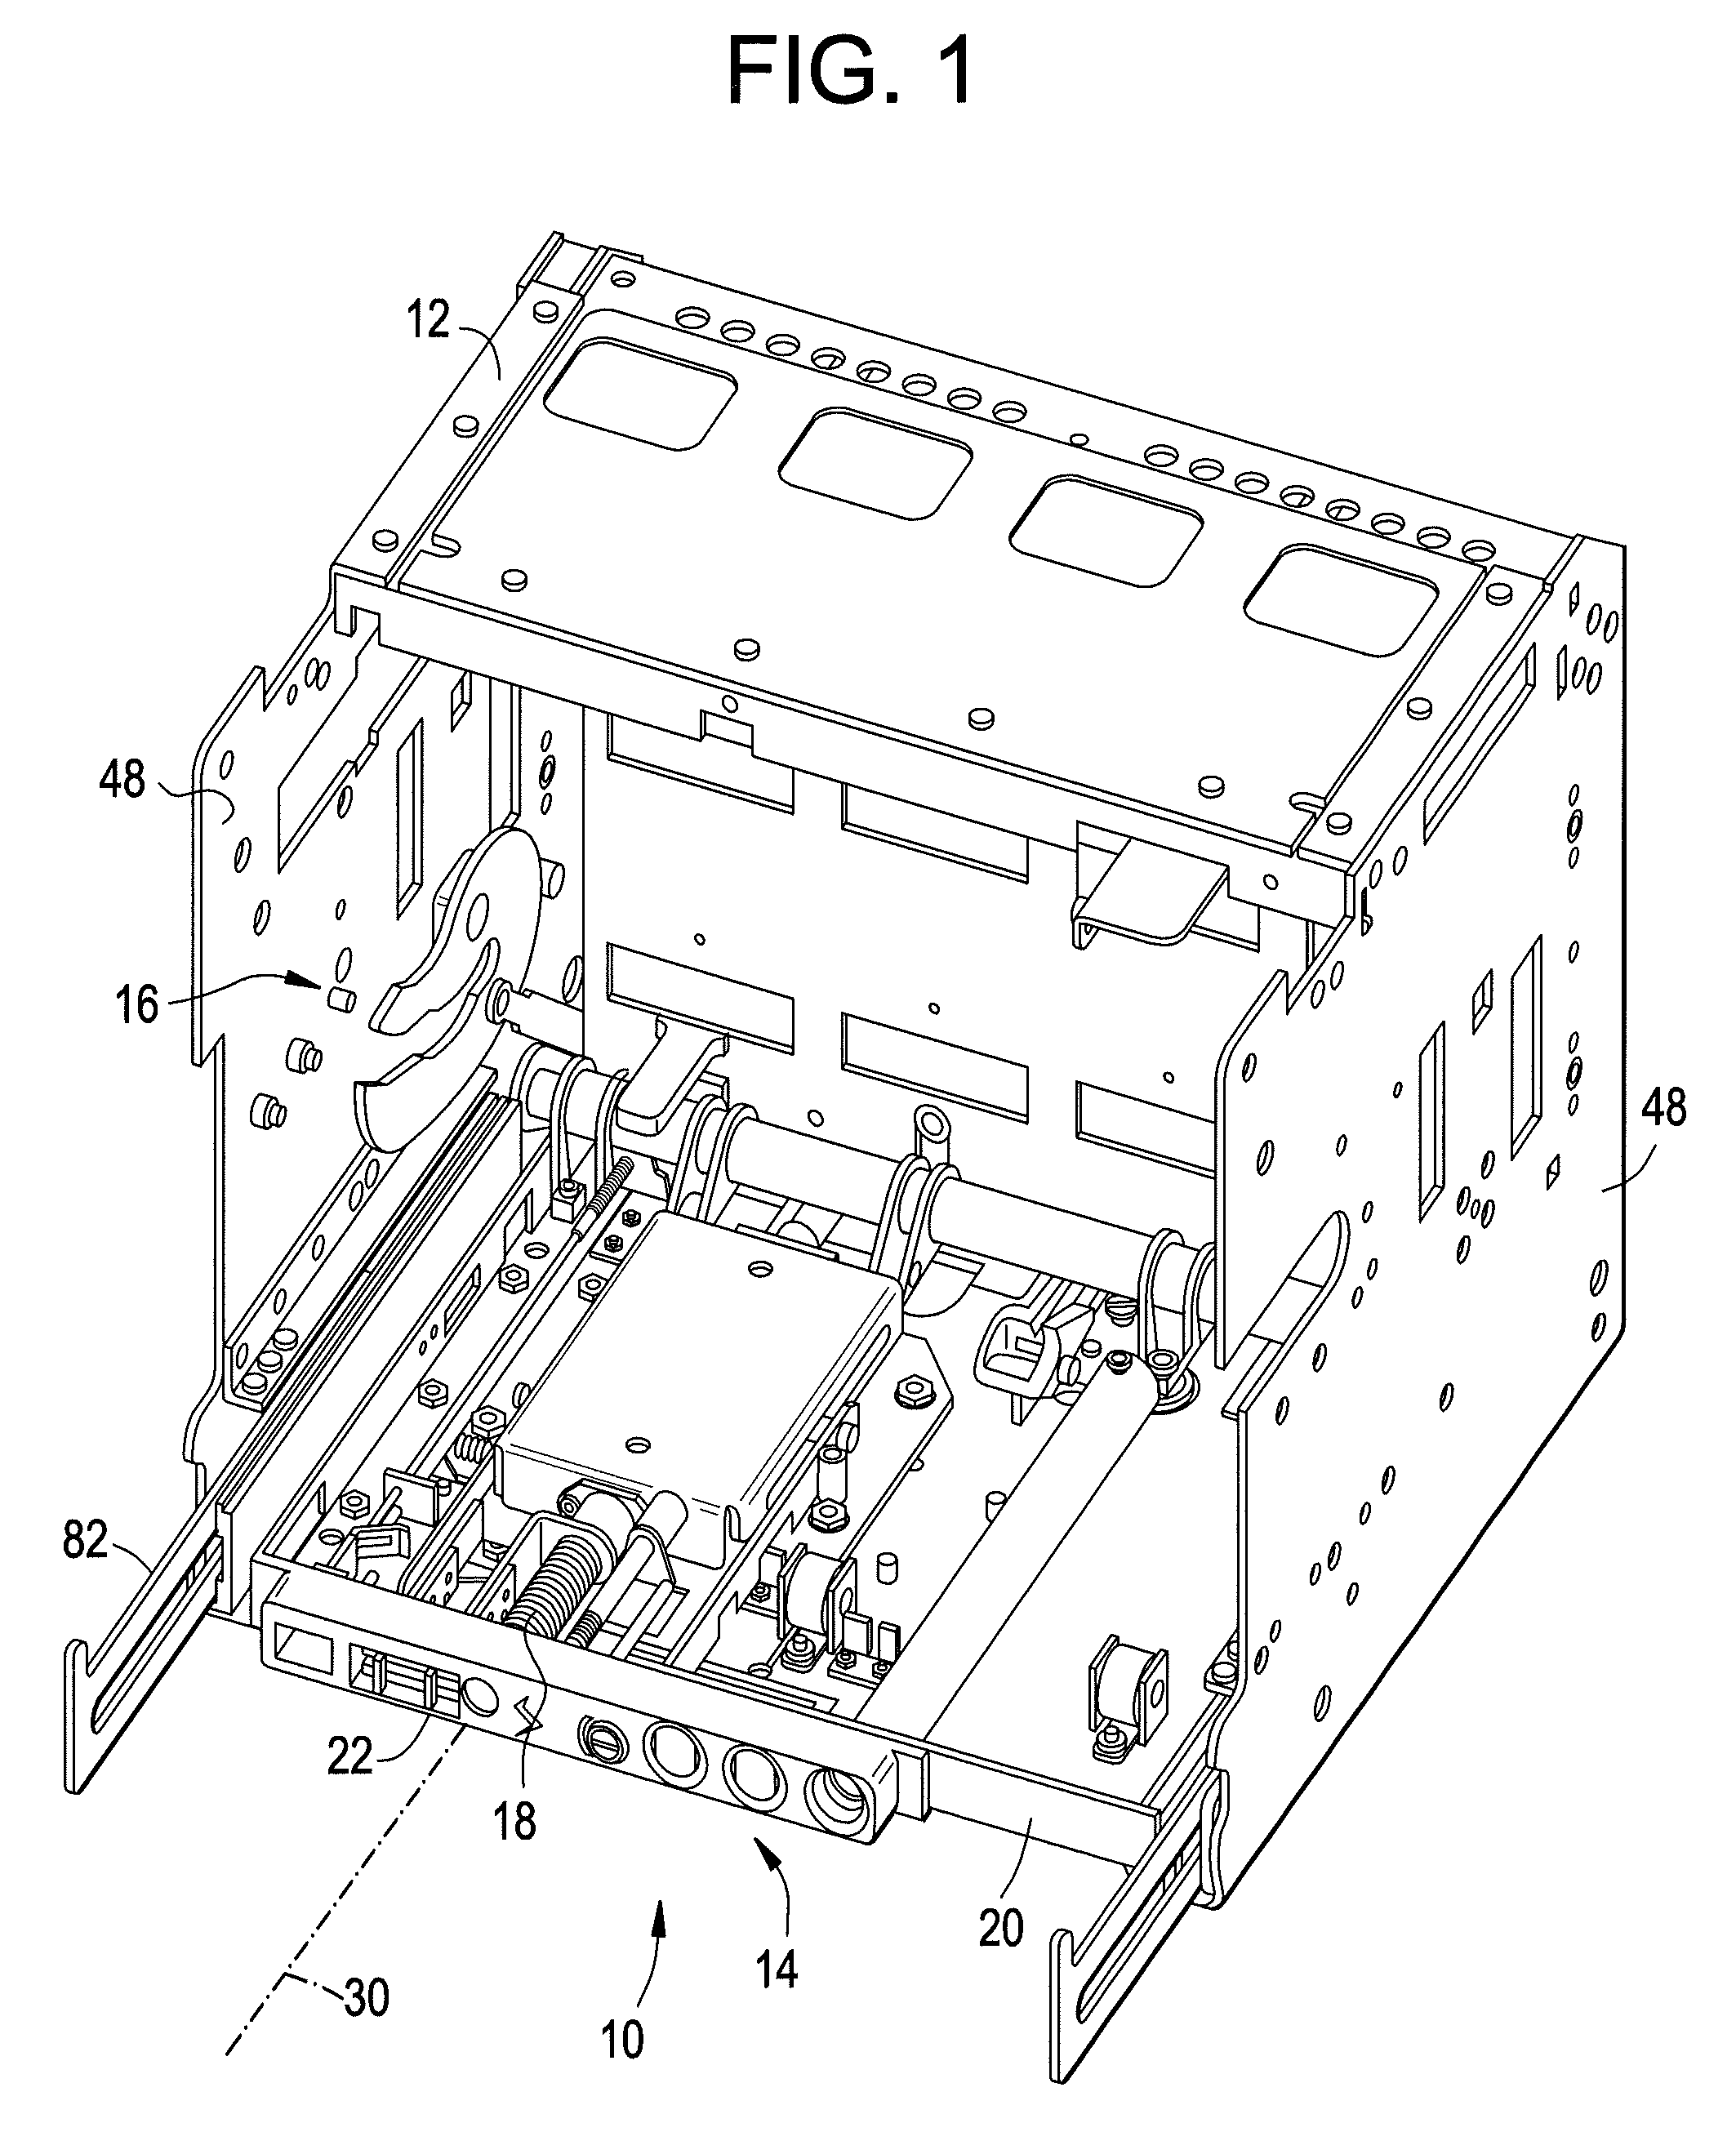 Racking mechanism for a circuit breaker